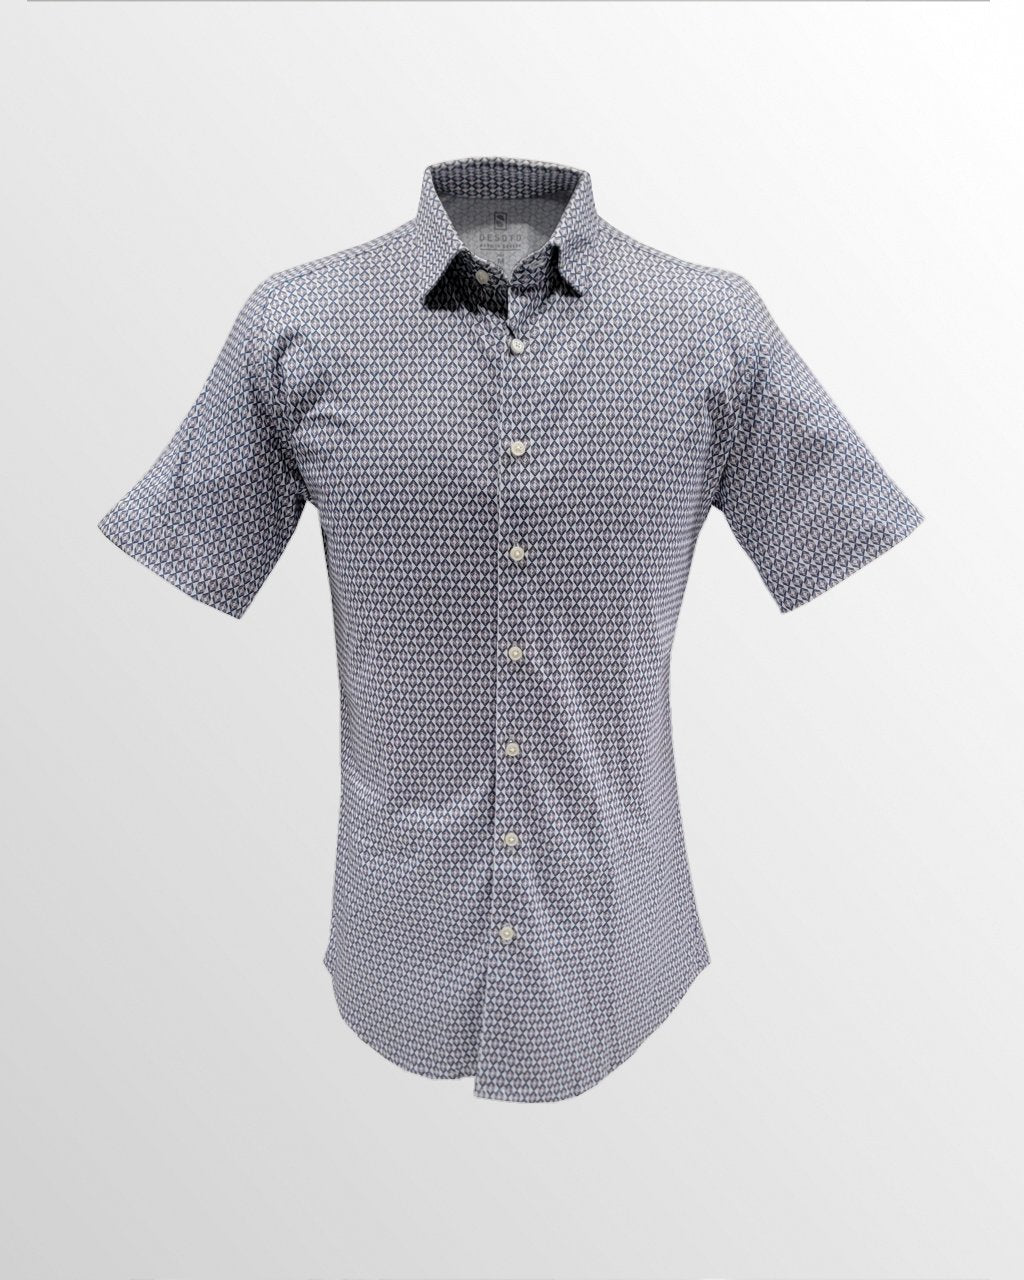 Desoto Short Sleeve Jersey Shirt in Vertical Diamond Pattern